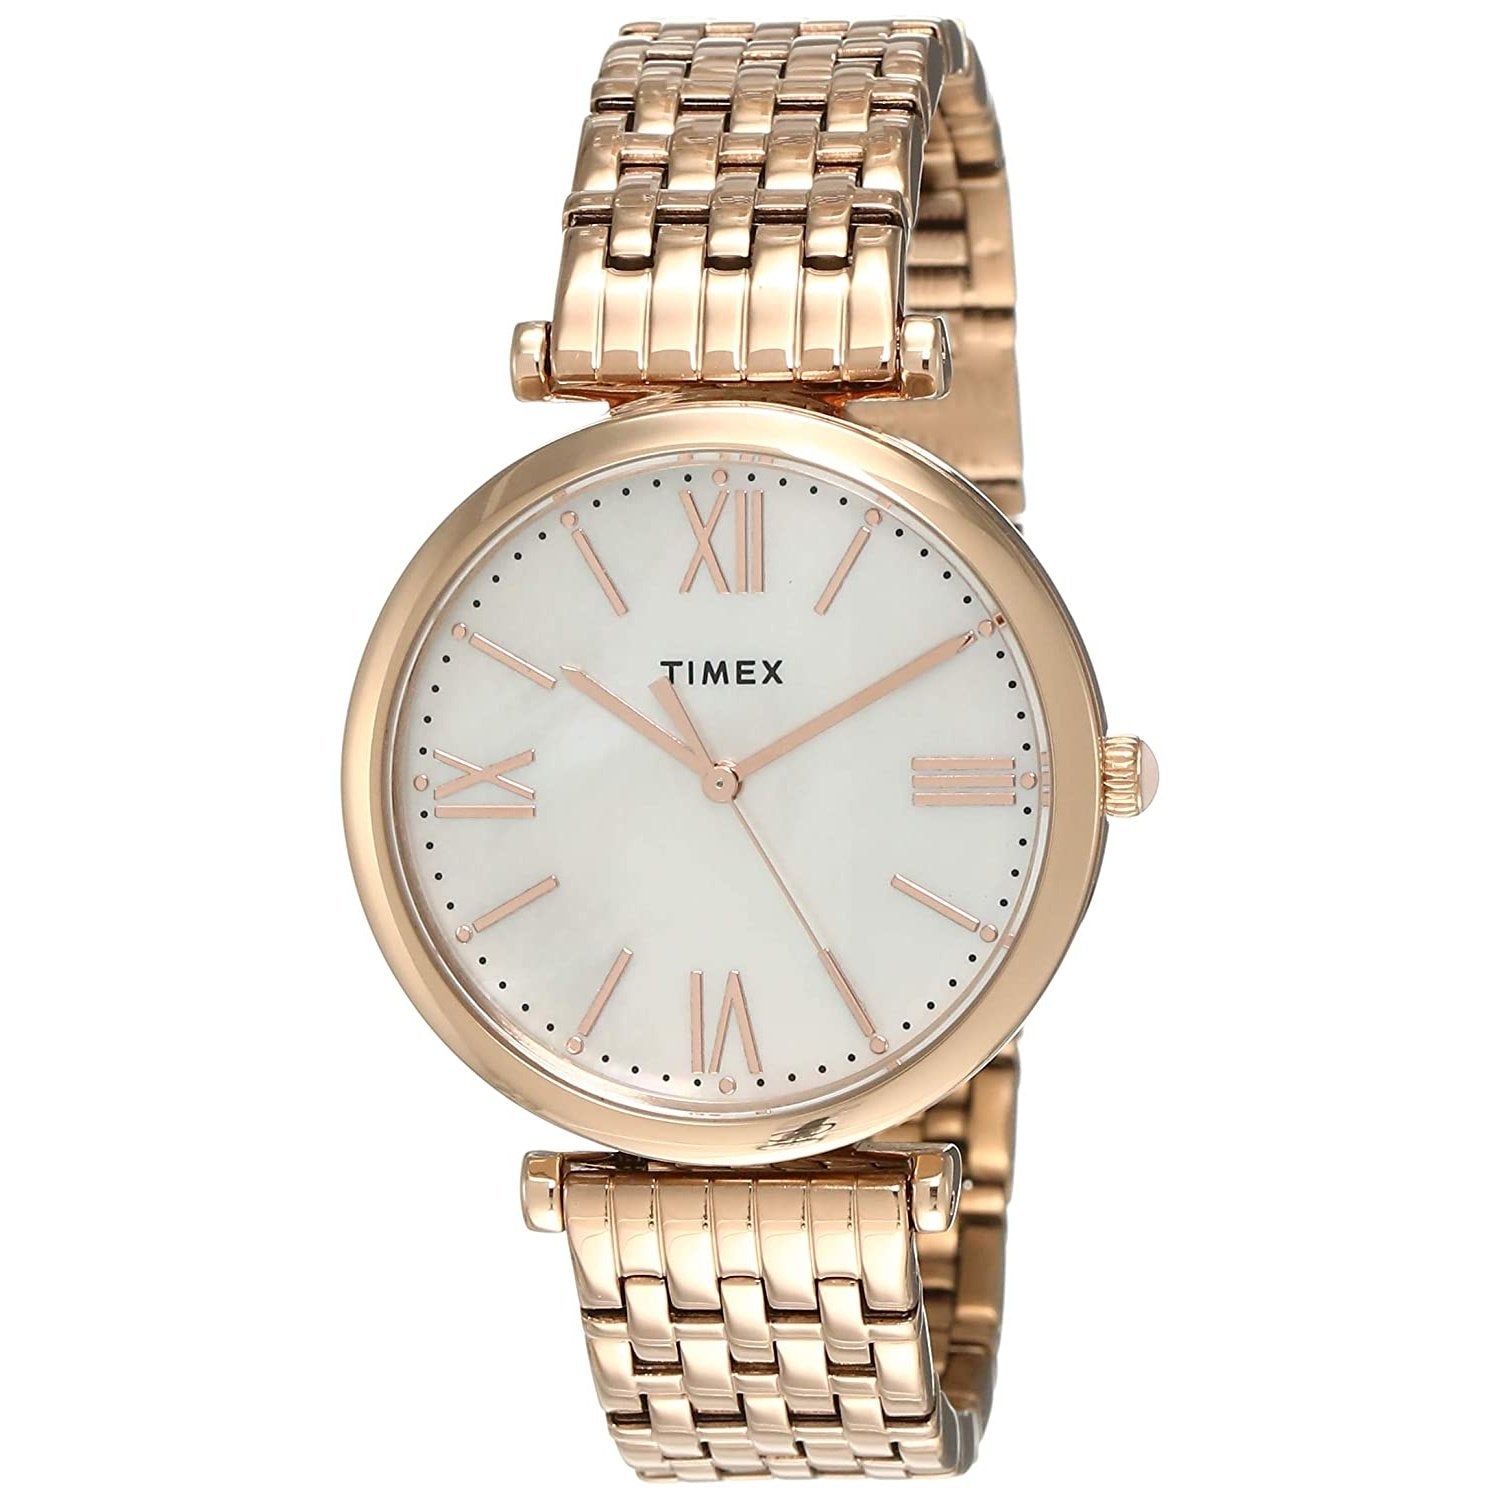 Timex Watches - Bezali